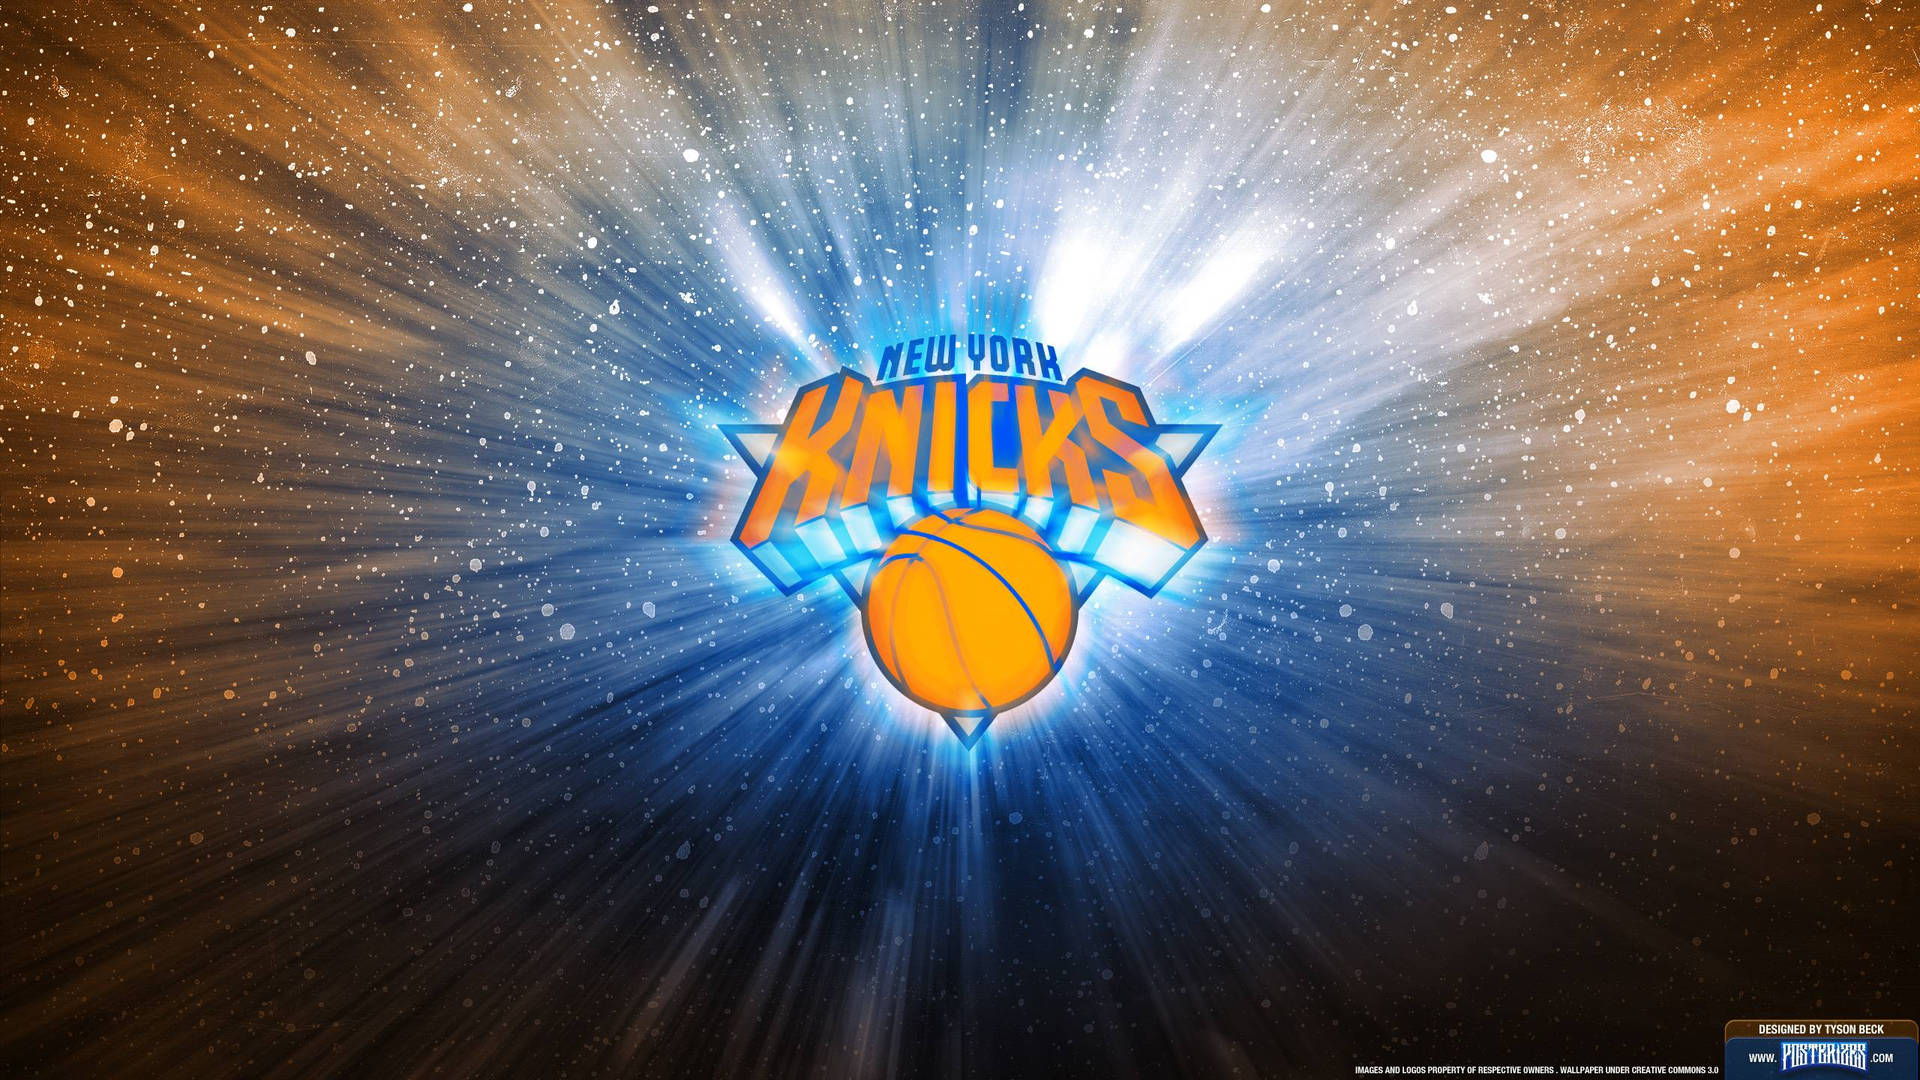 New York Knicks Basketball Team Background